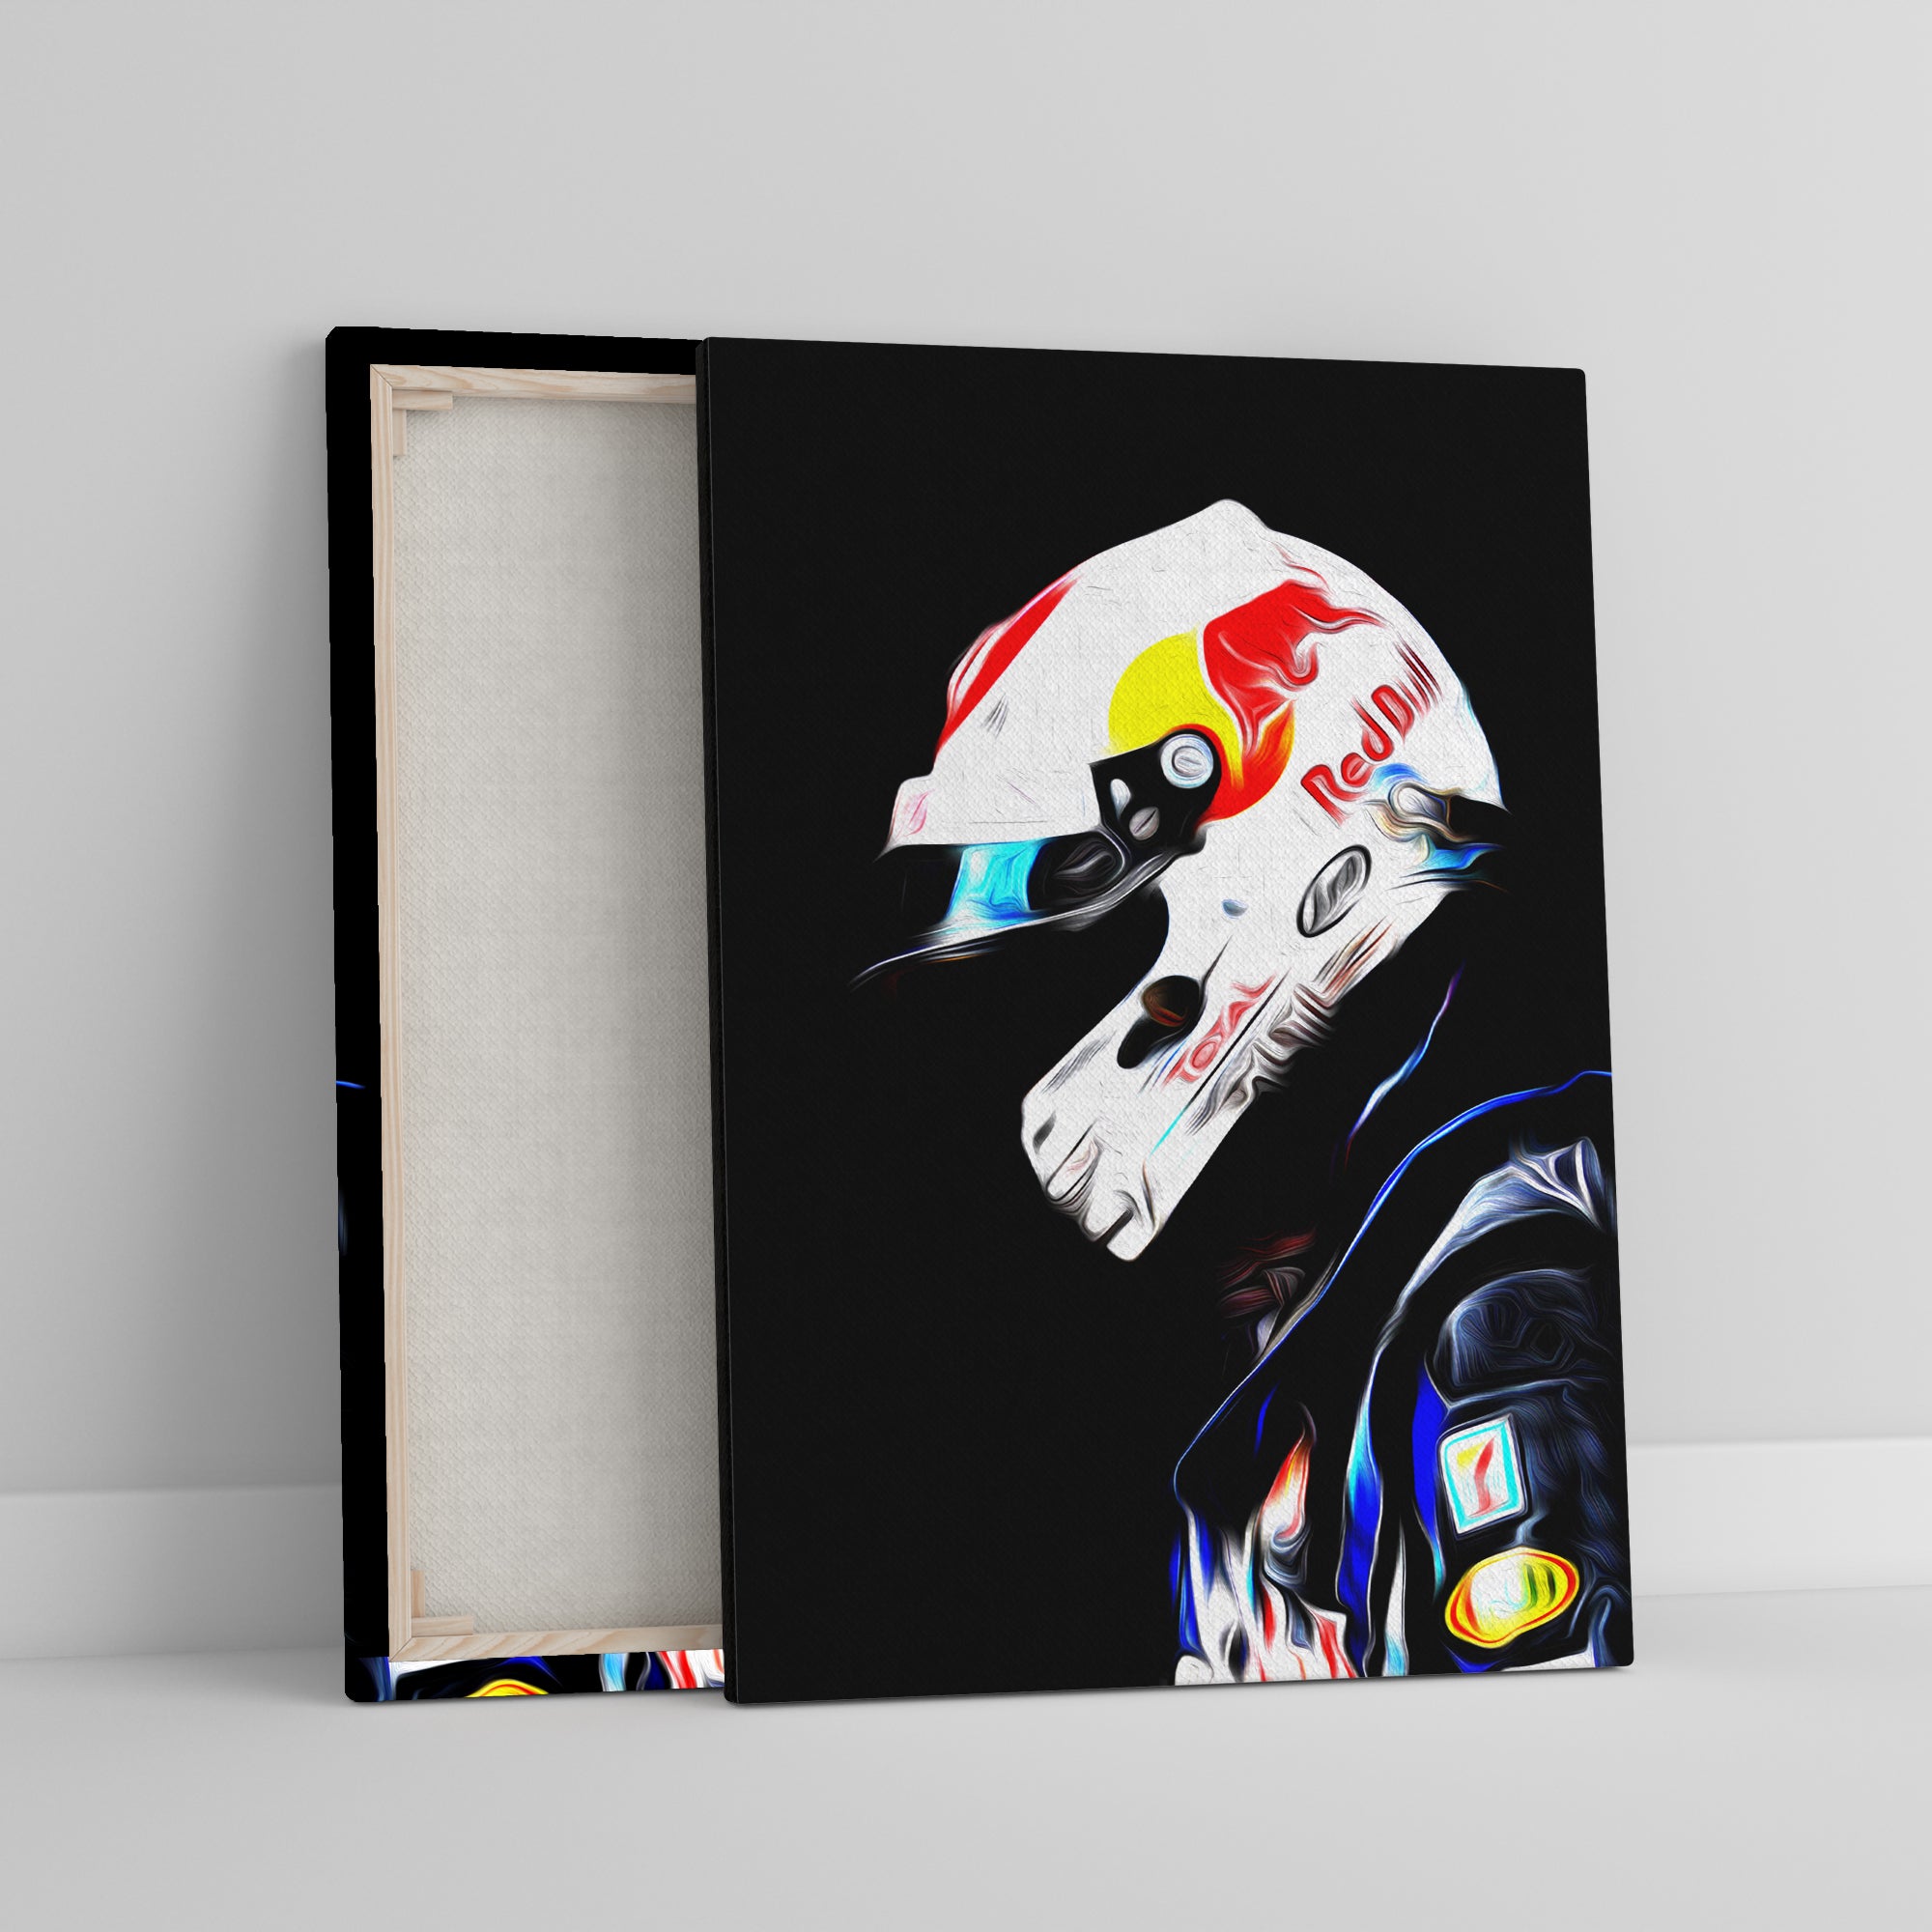 Sebastian Vettel, Red Bull 2011 "Japan" - Formula 1 Print